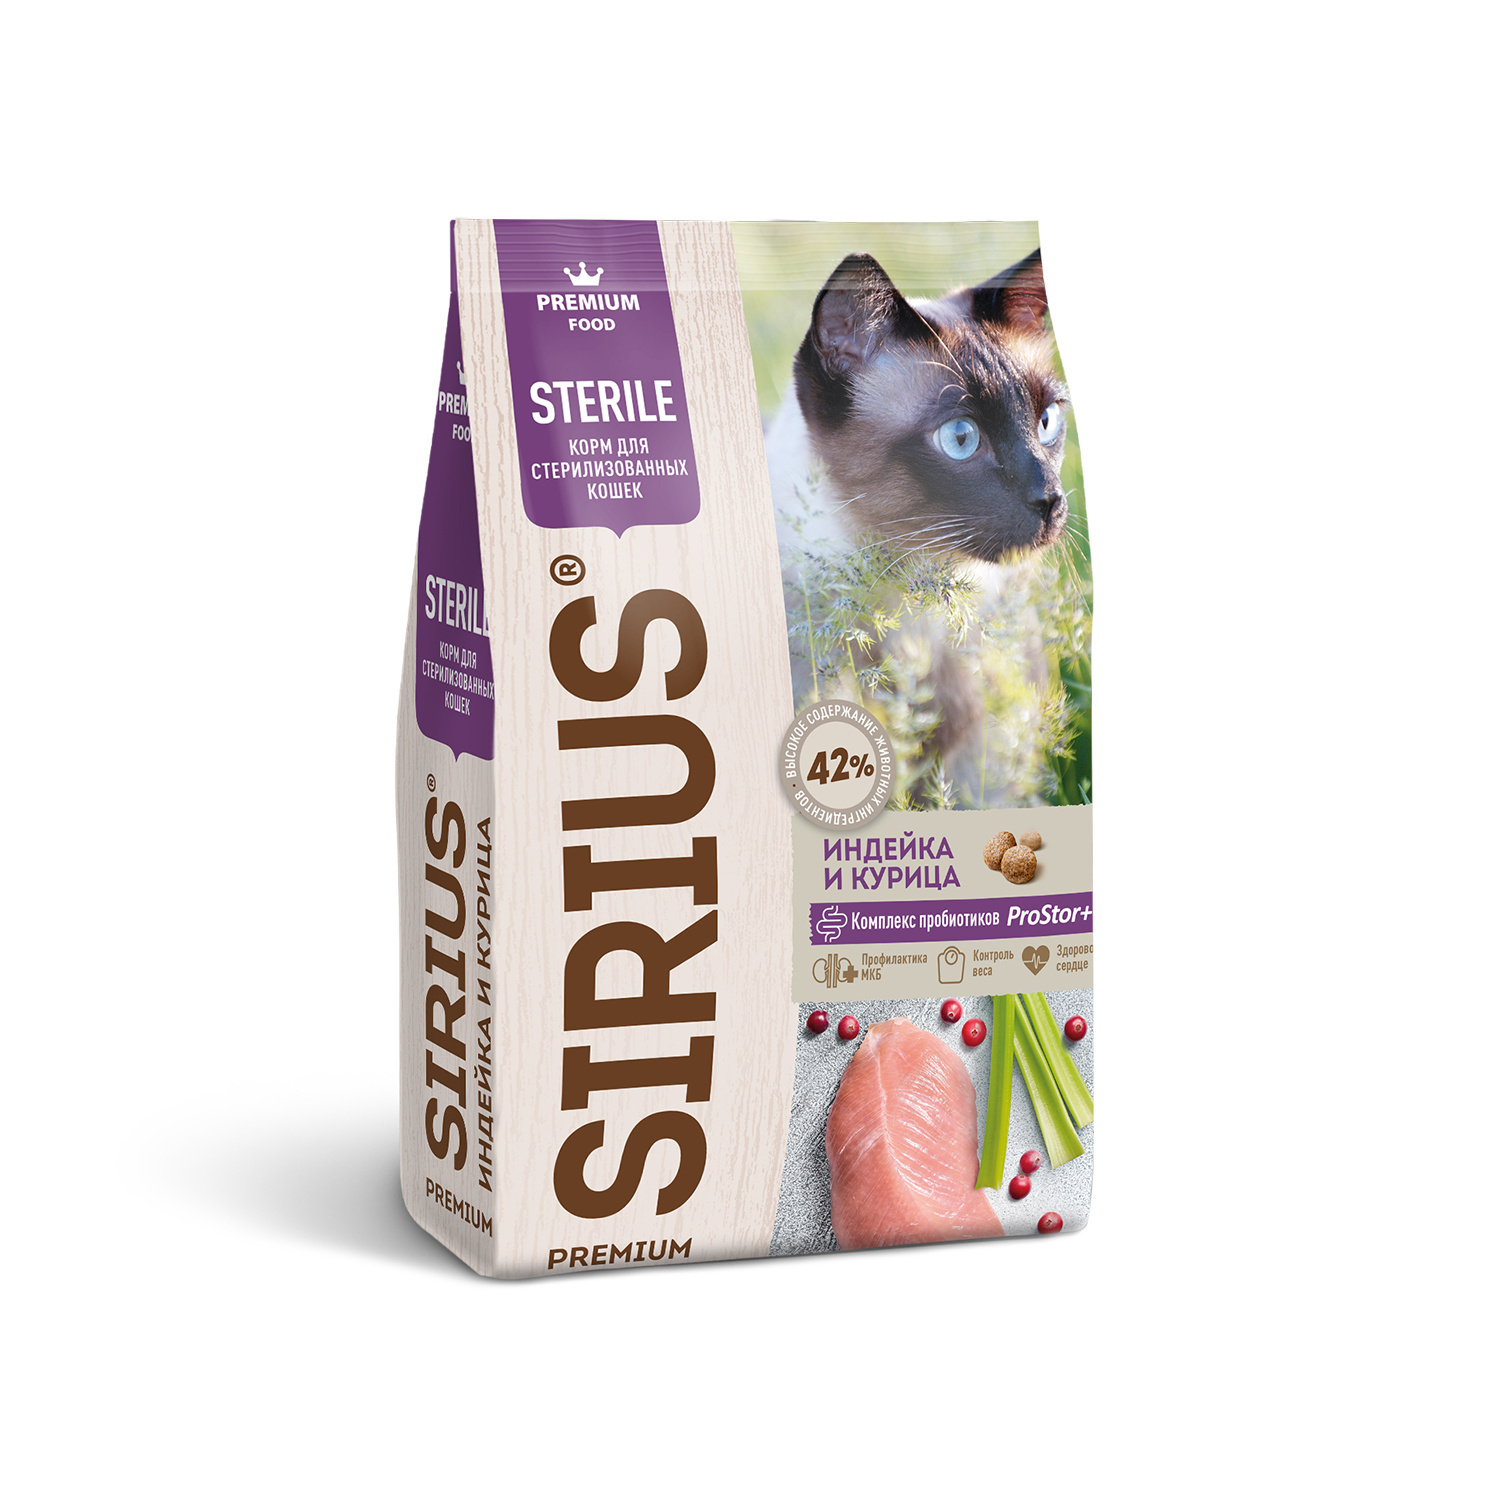 Sirius Sirius сухой корм для стерилизованных кошек, индейка и курица (10 кг) sirius sirius сухой корм для стерилизованных кошек утка и клюква 10 кг